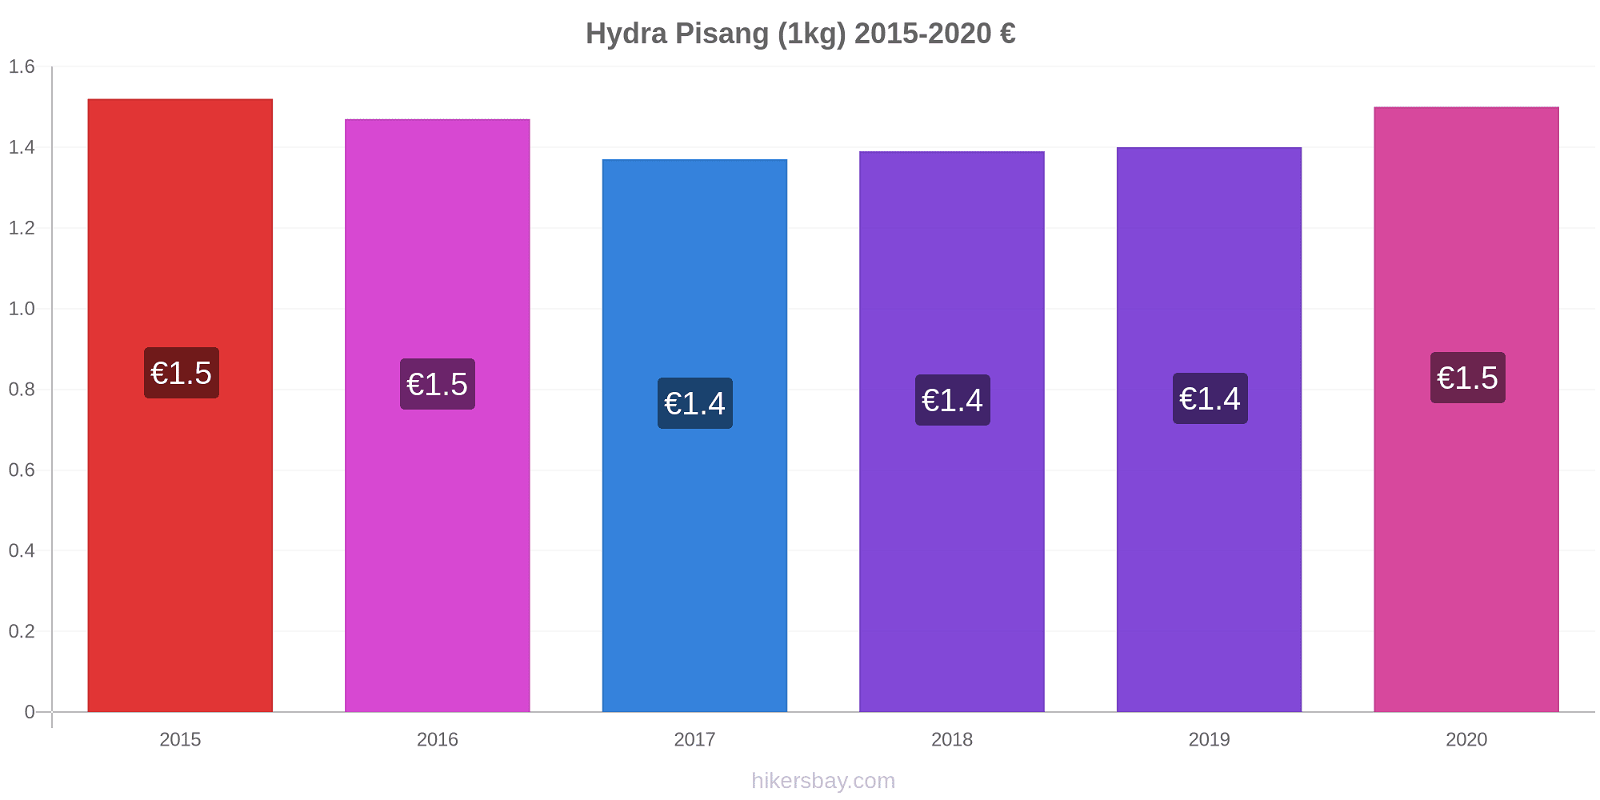 Hydra perubahan harga Pisang (1kg) hikersbay.com